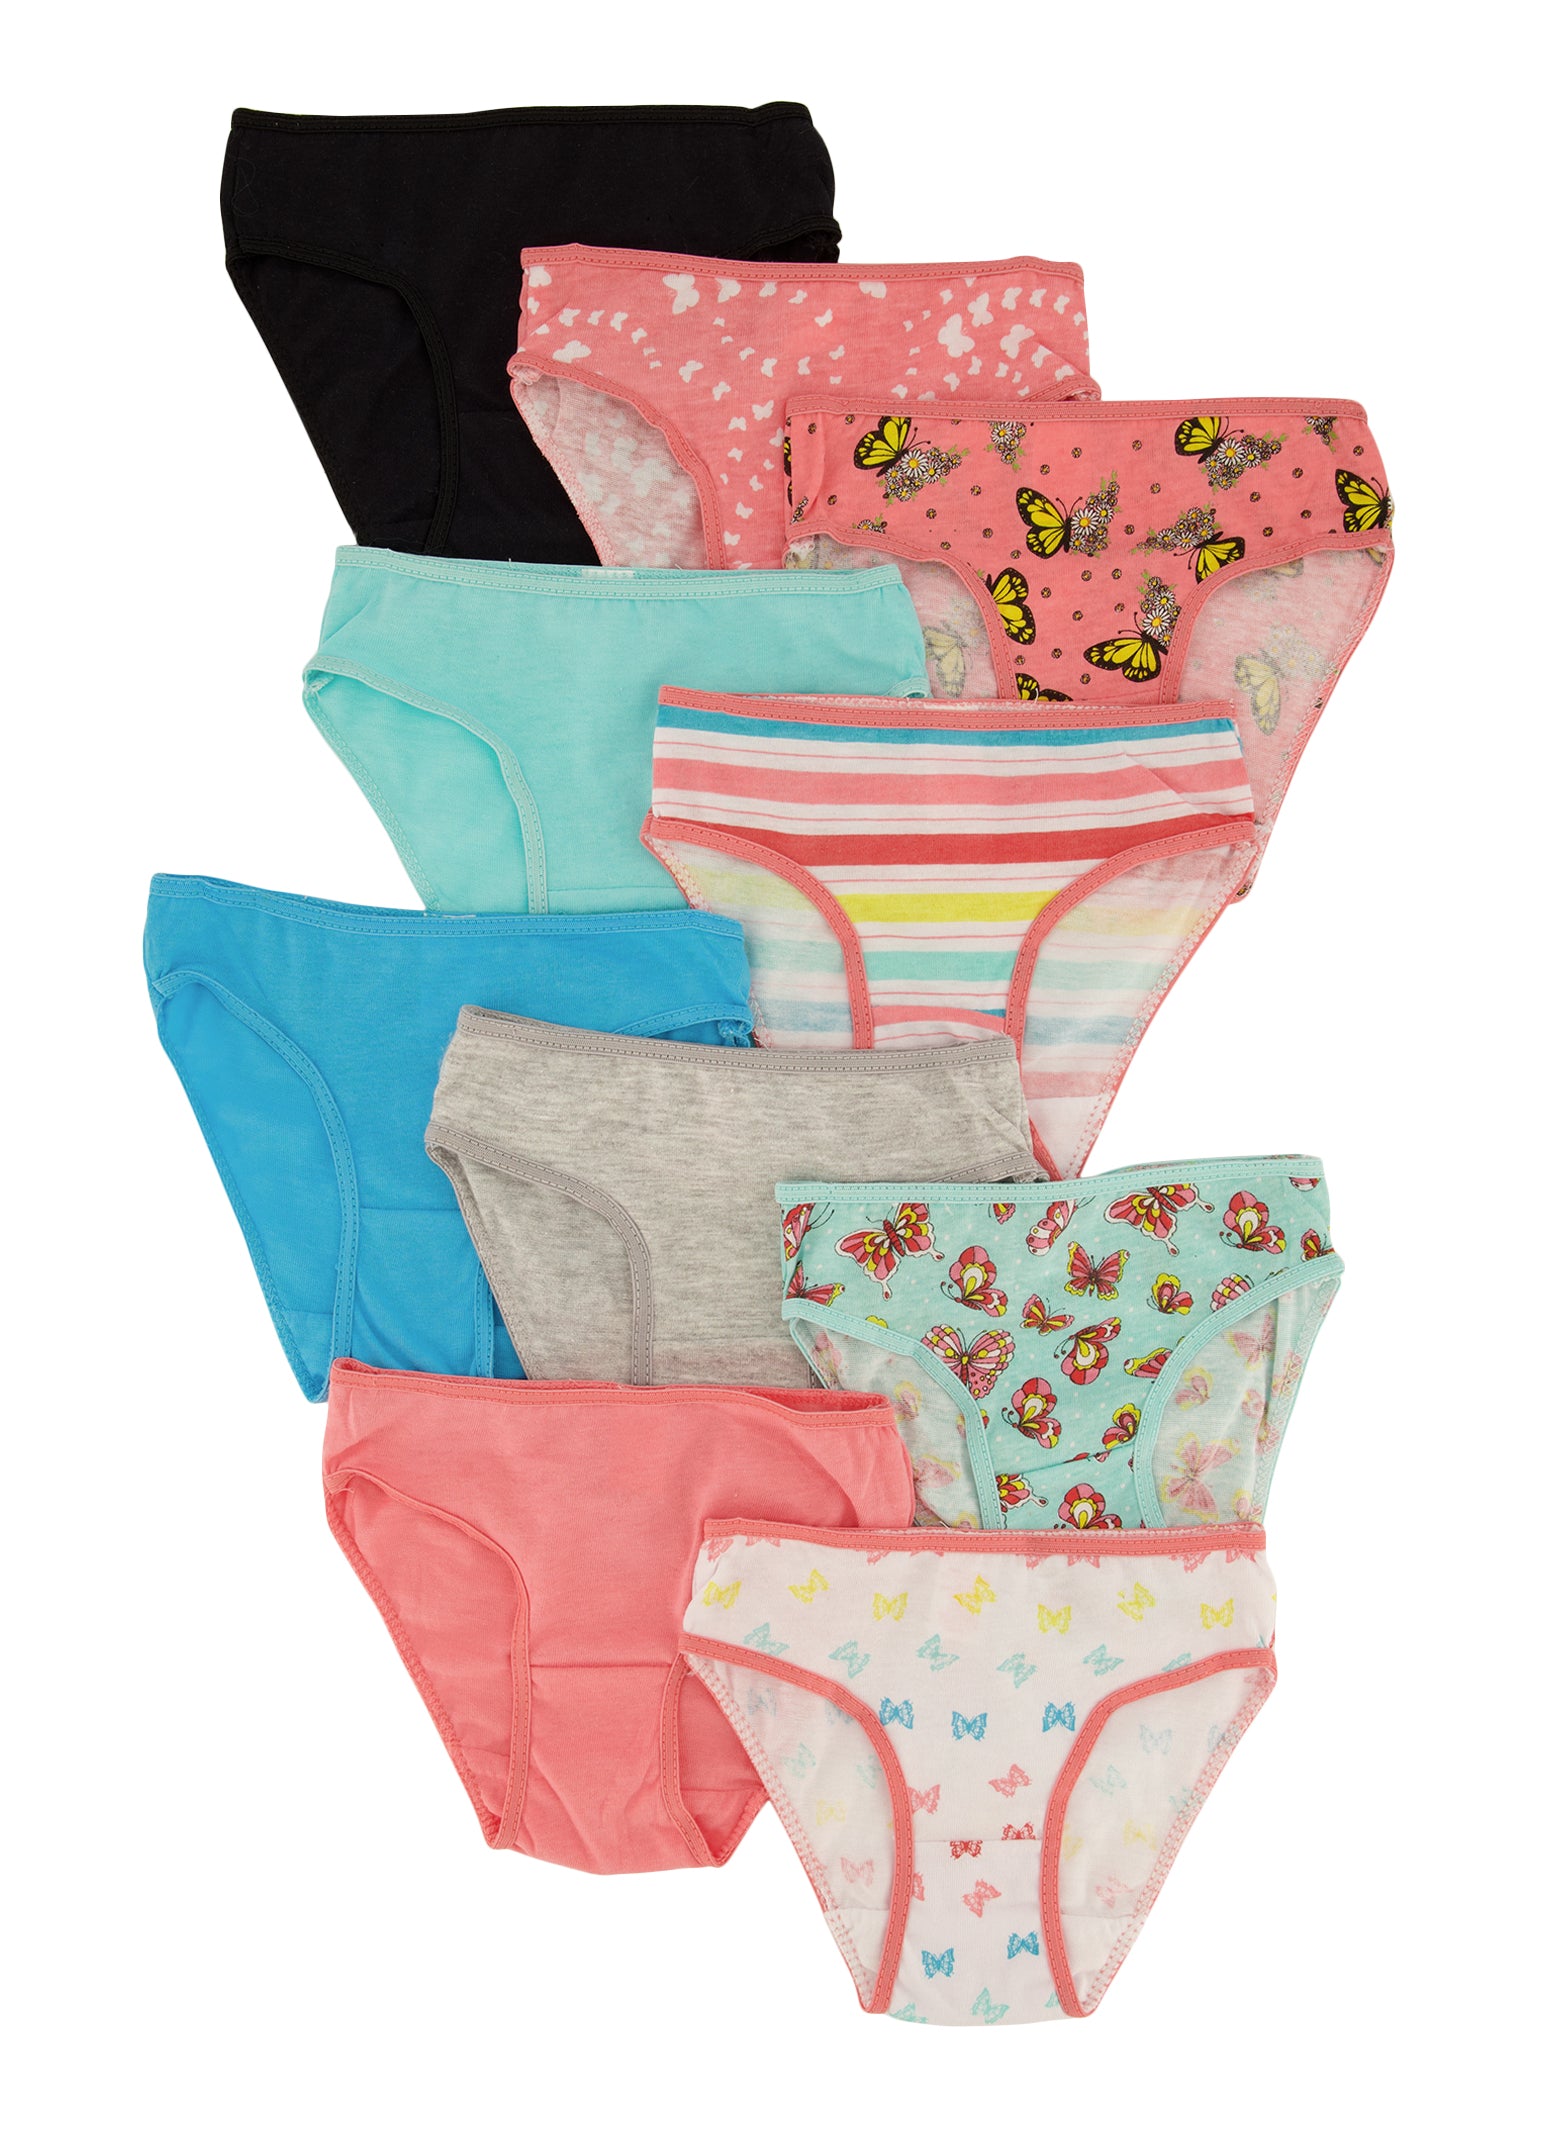 10-Pack Cotton Bikini Panty - Multicolor